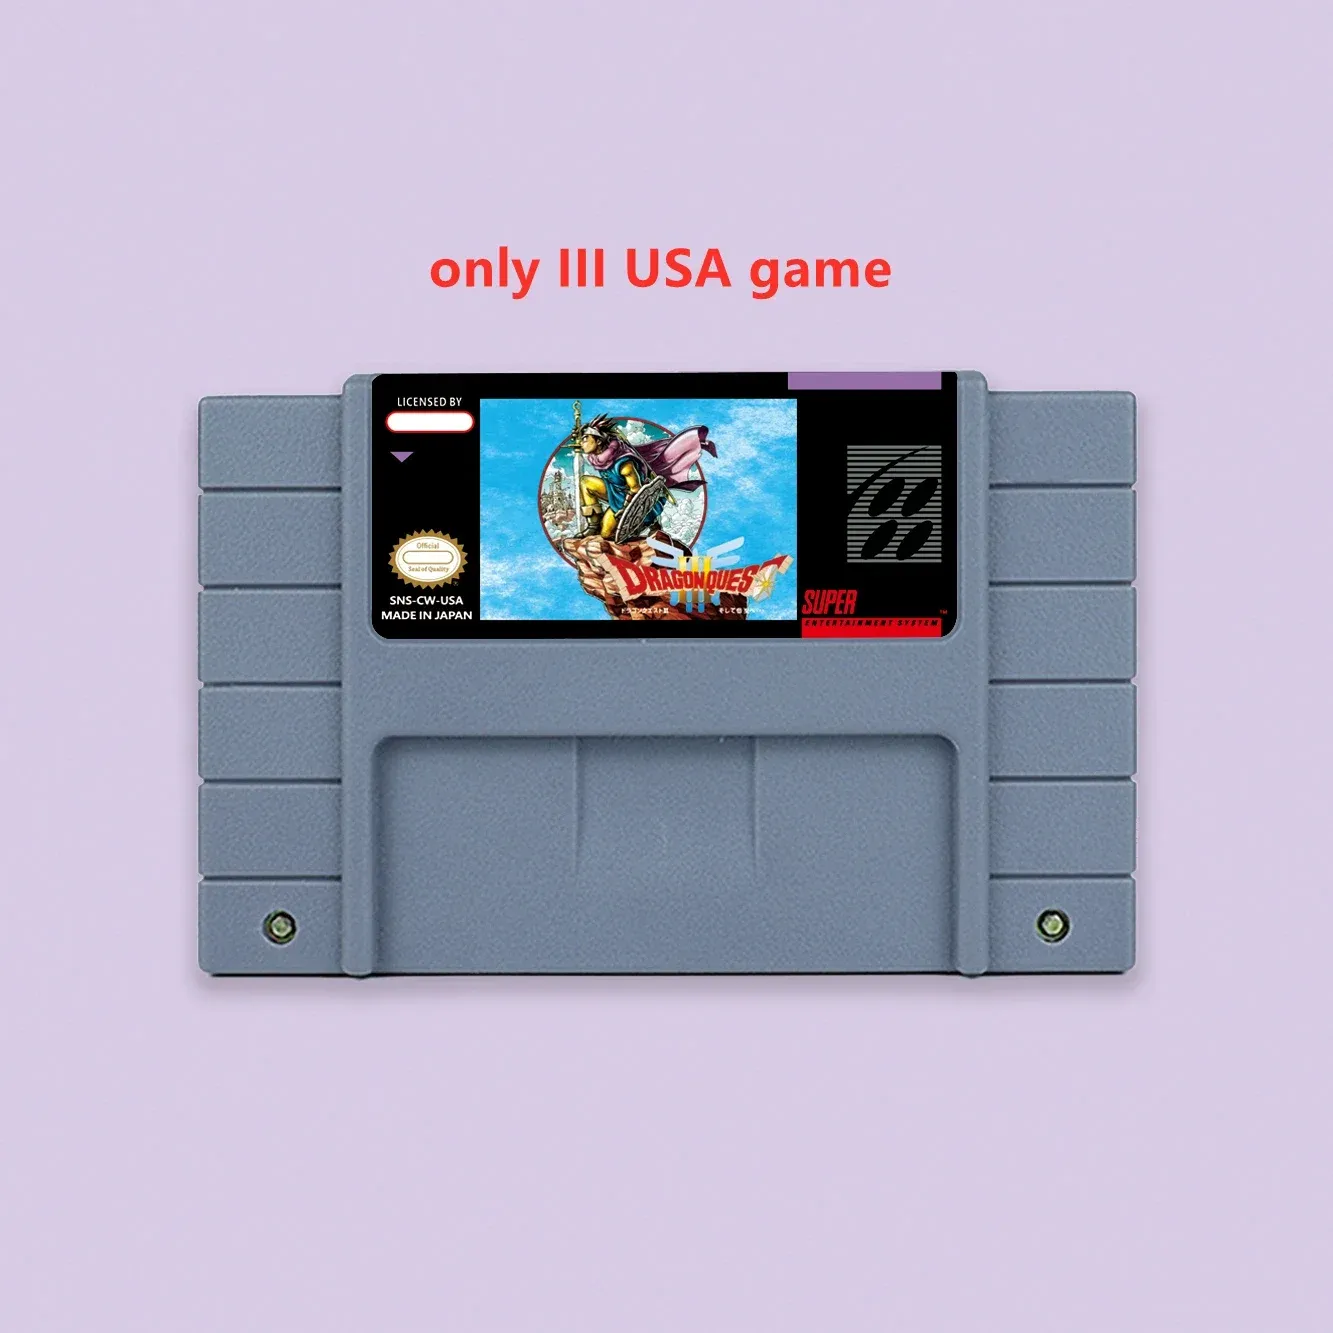 Färg: Endast III USA -spel